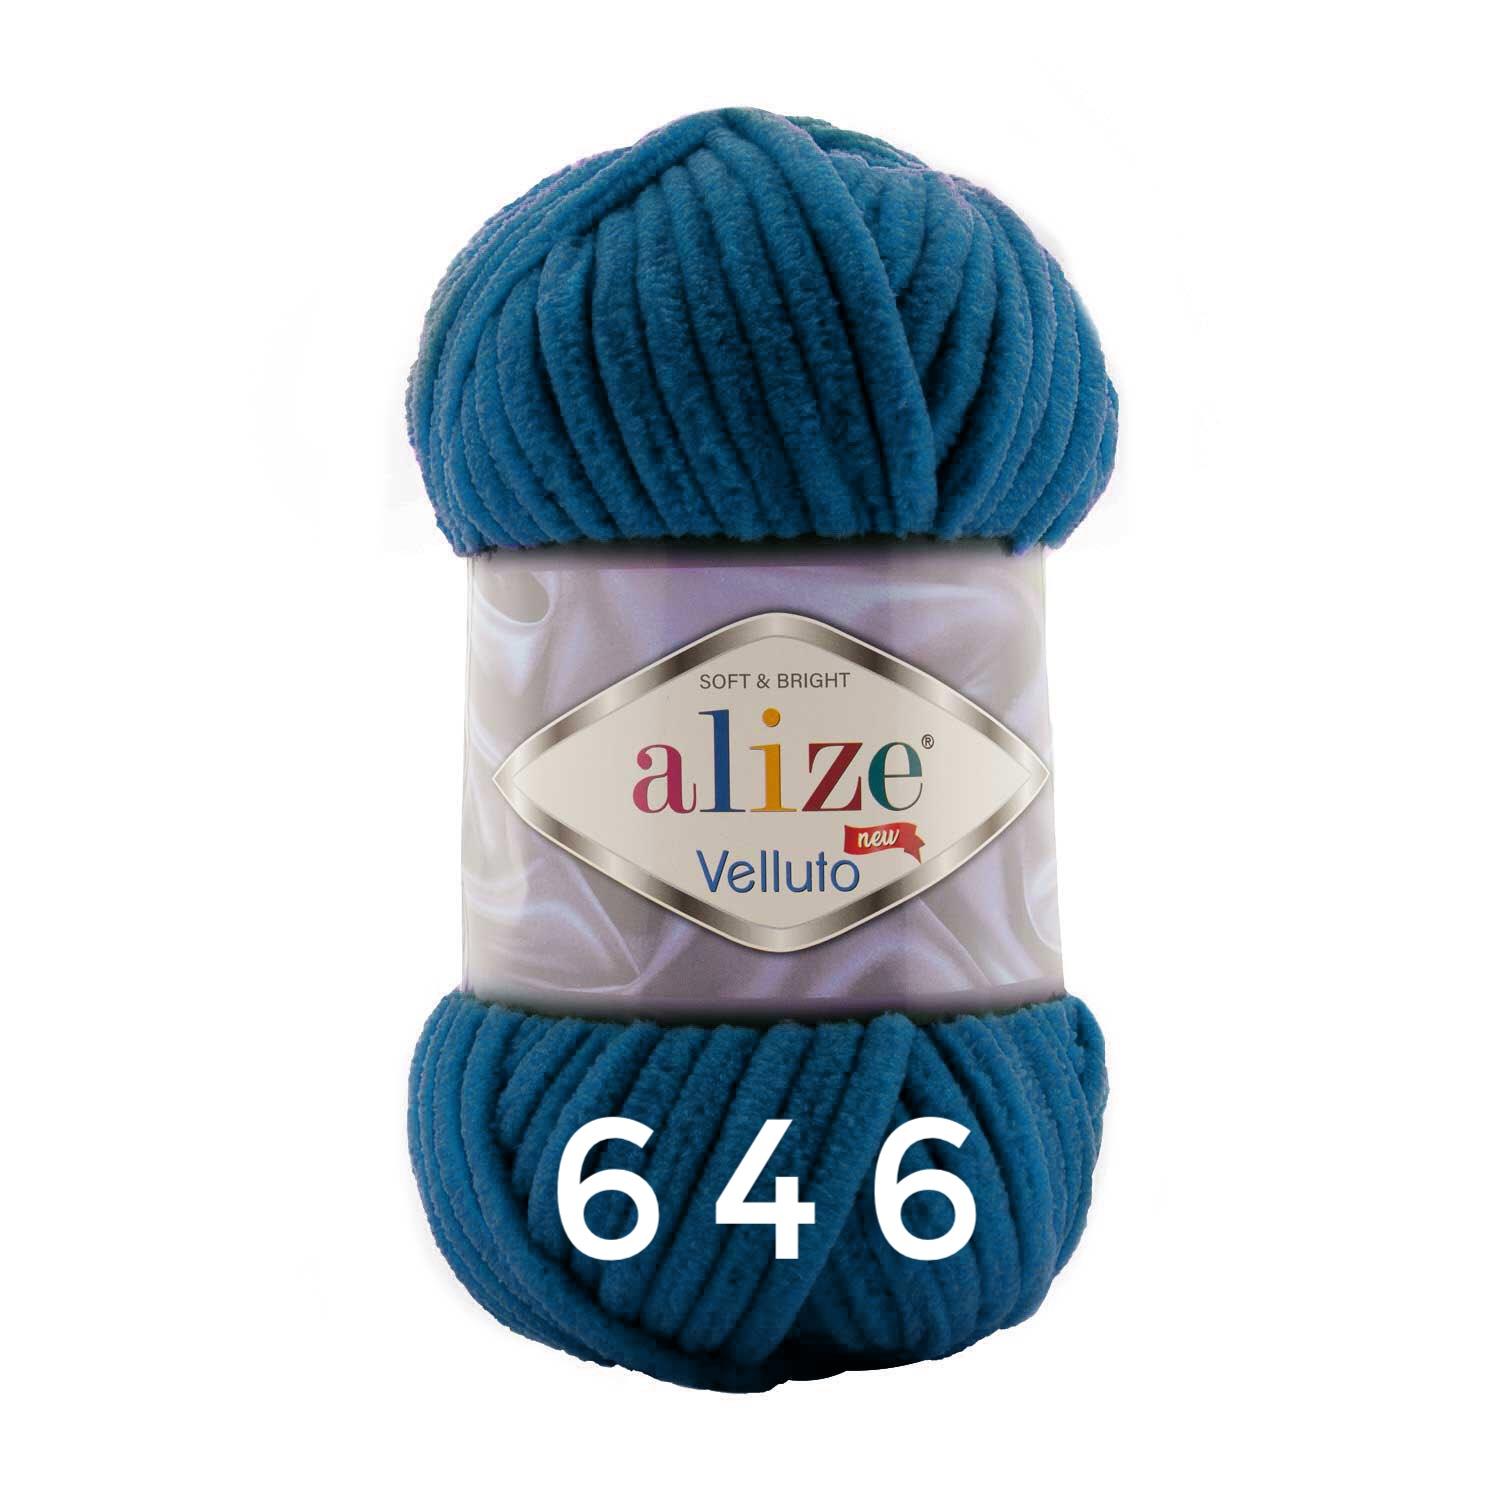 Alize Velluto, 646 mykonos blue